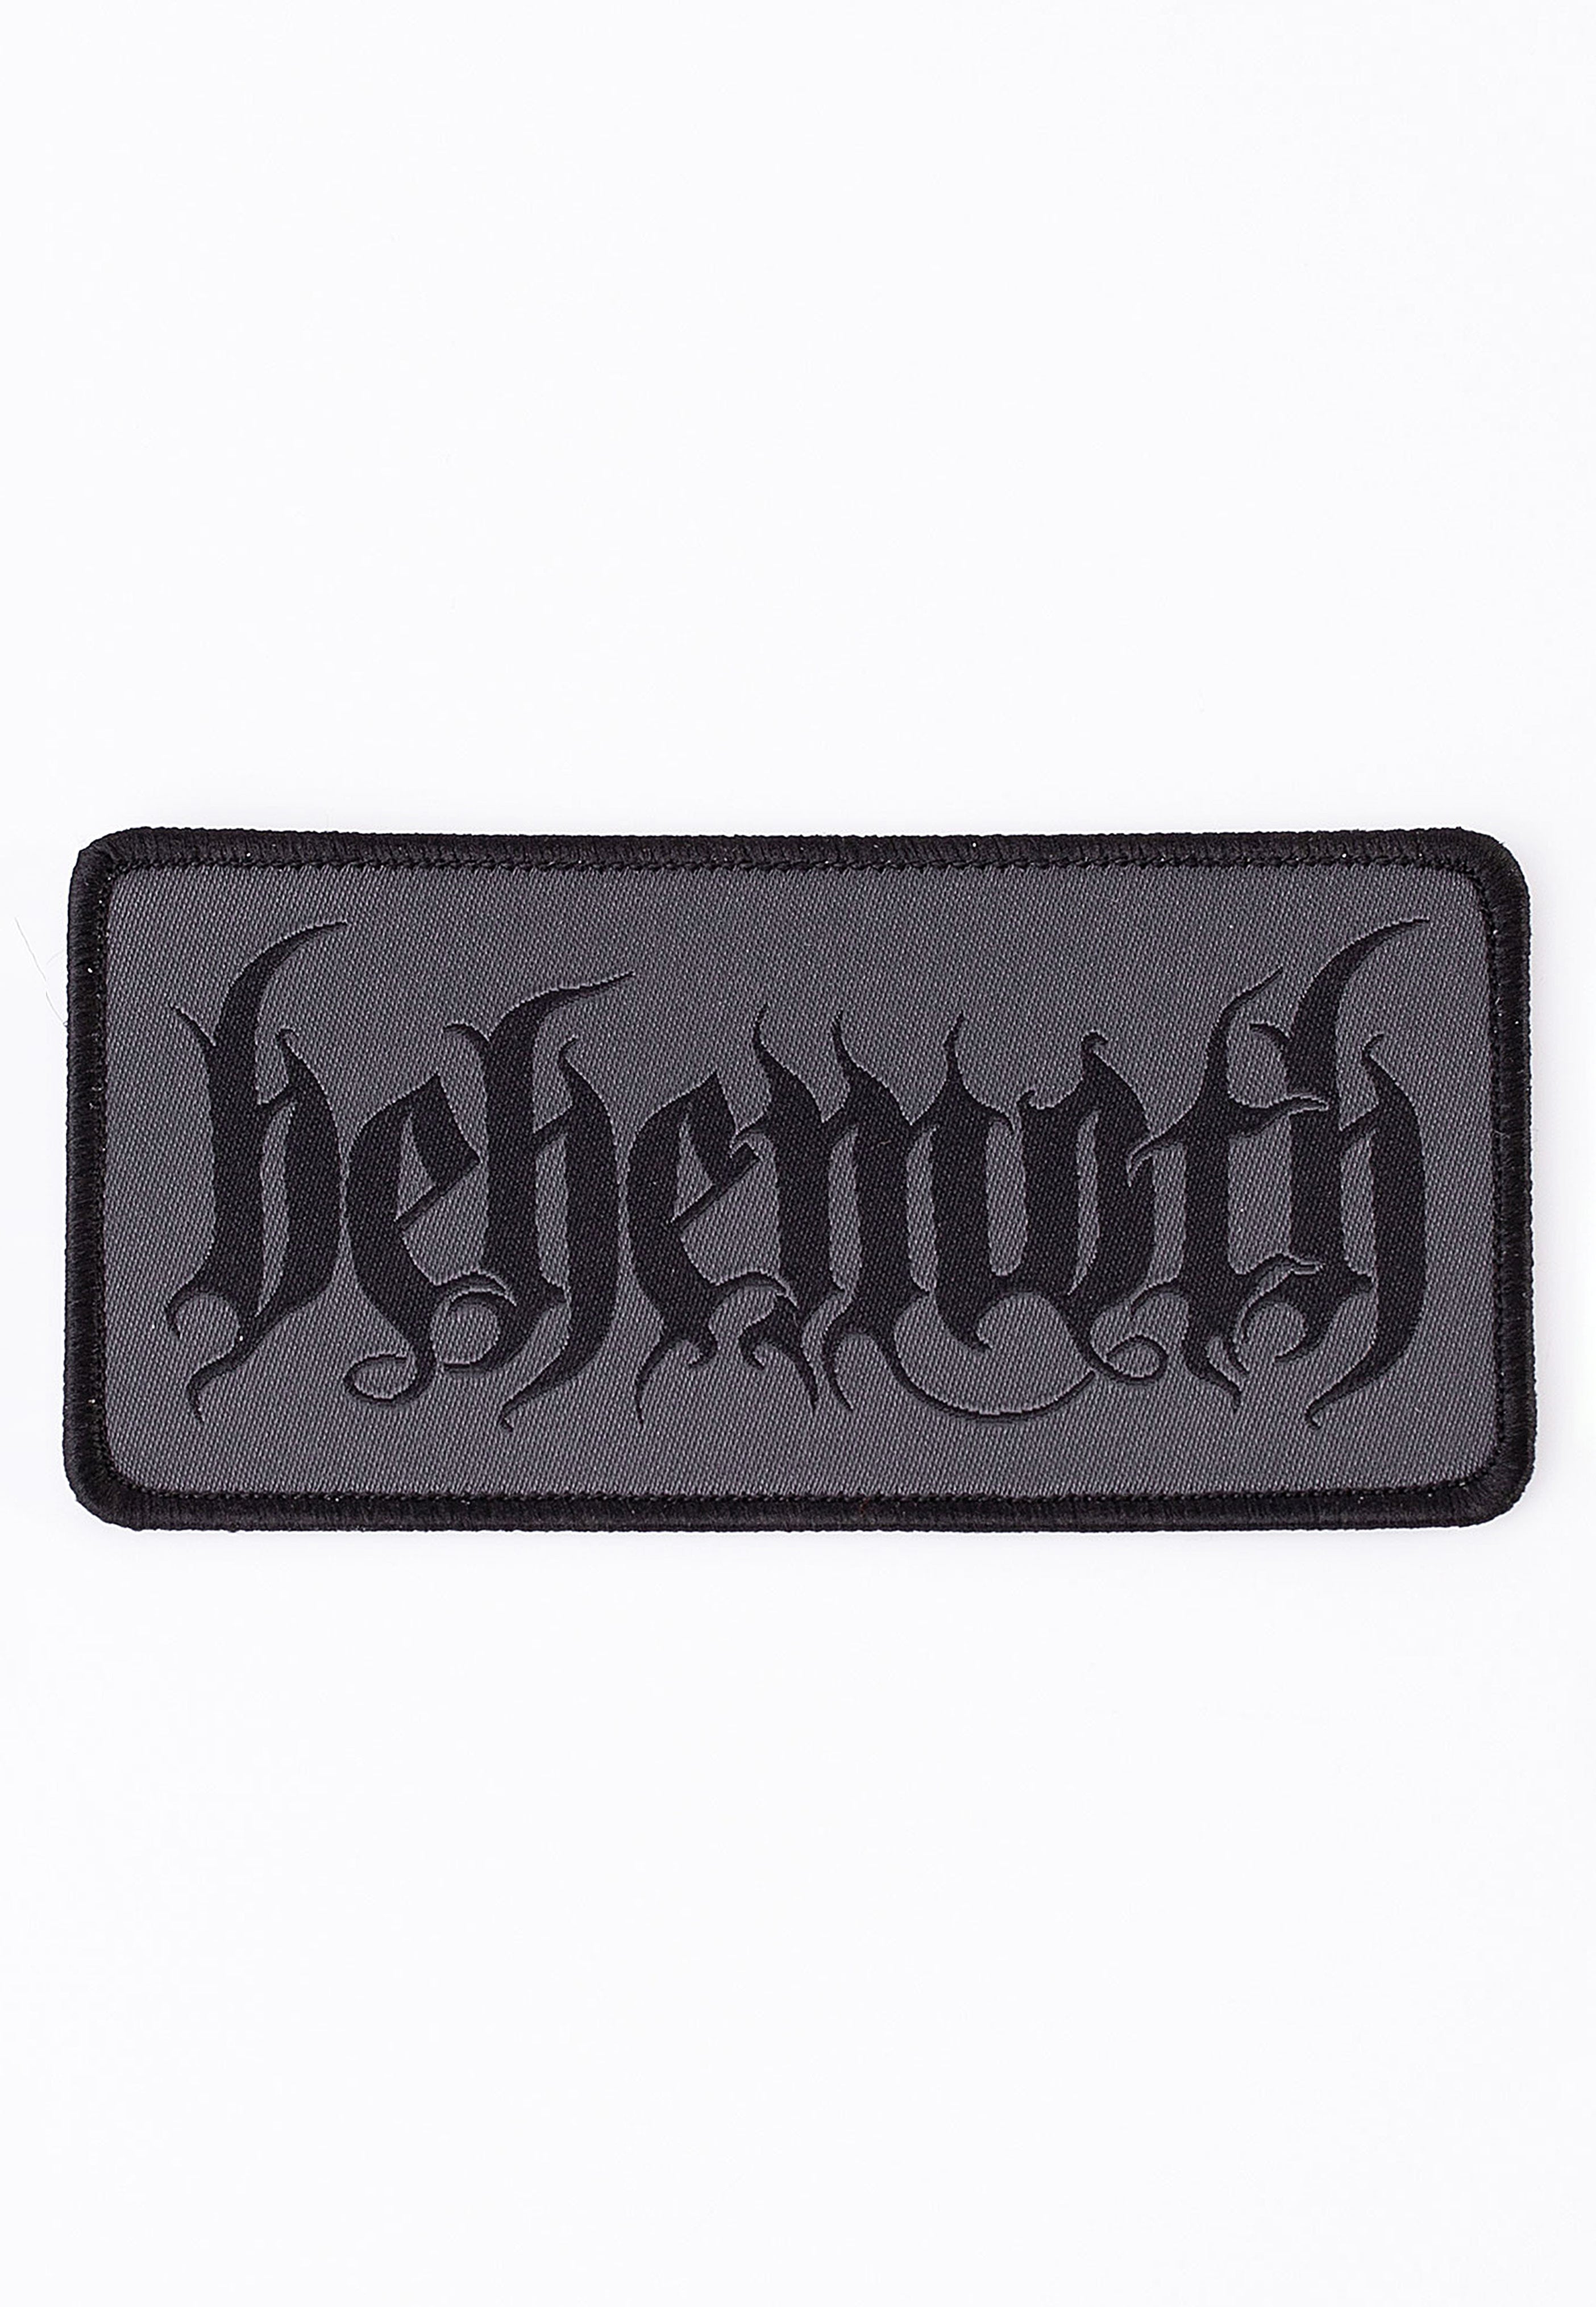 Behemoth - Black Logo - Patch